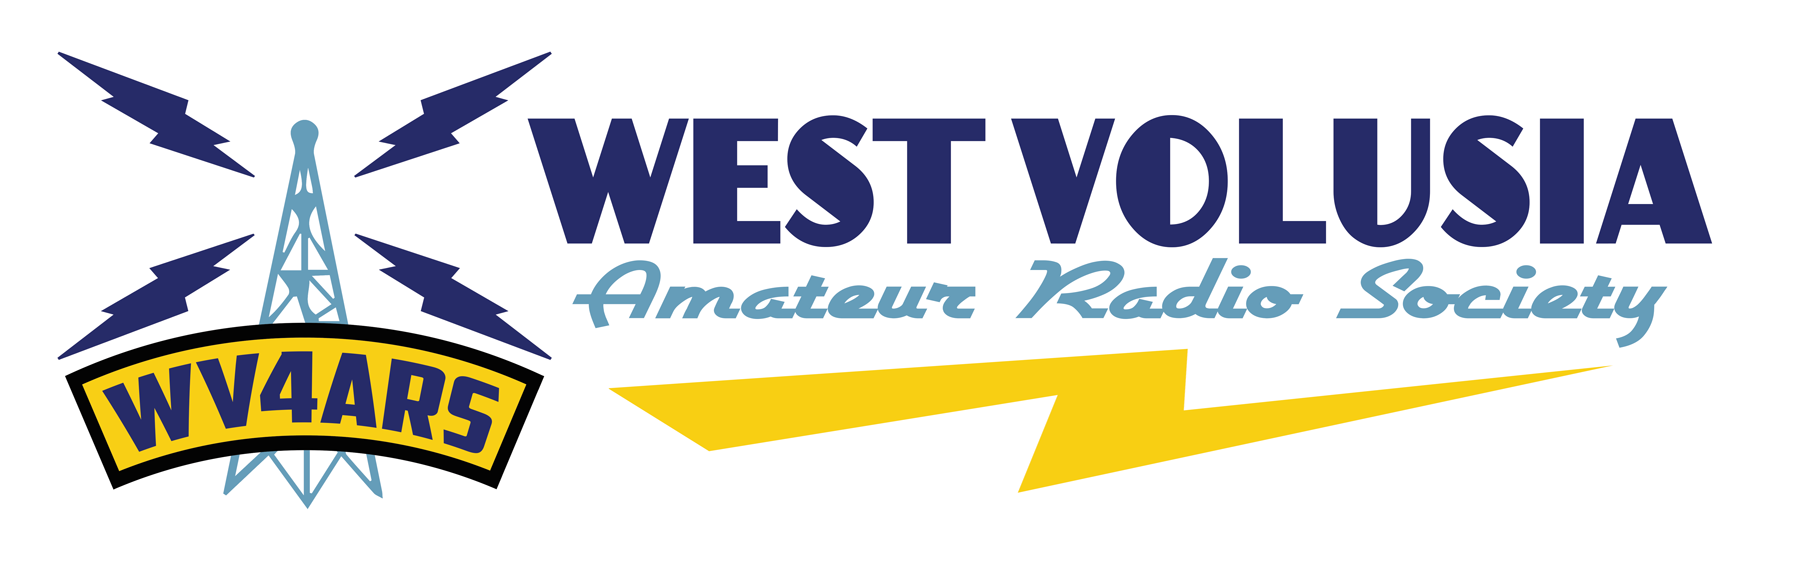 West Volusia Amateur Radio Society